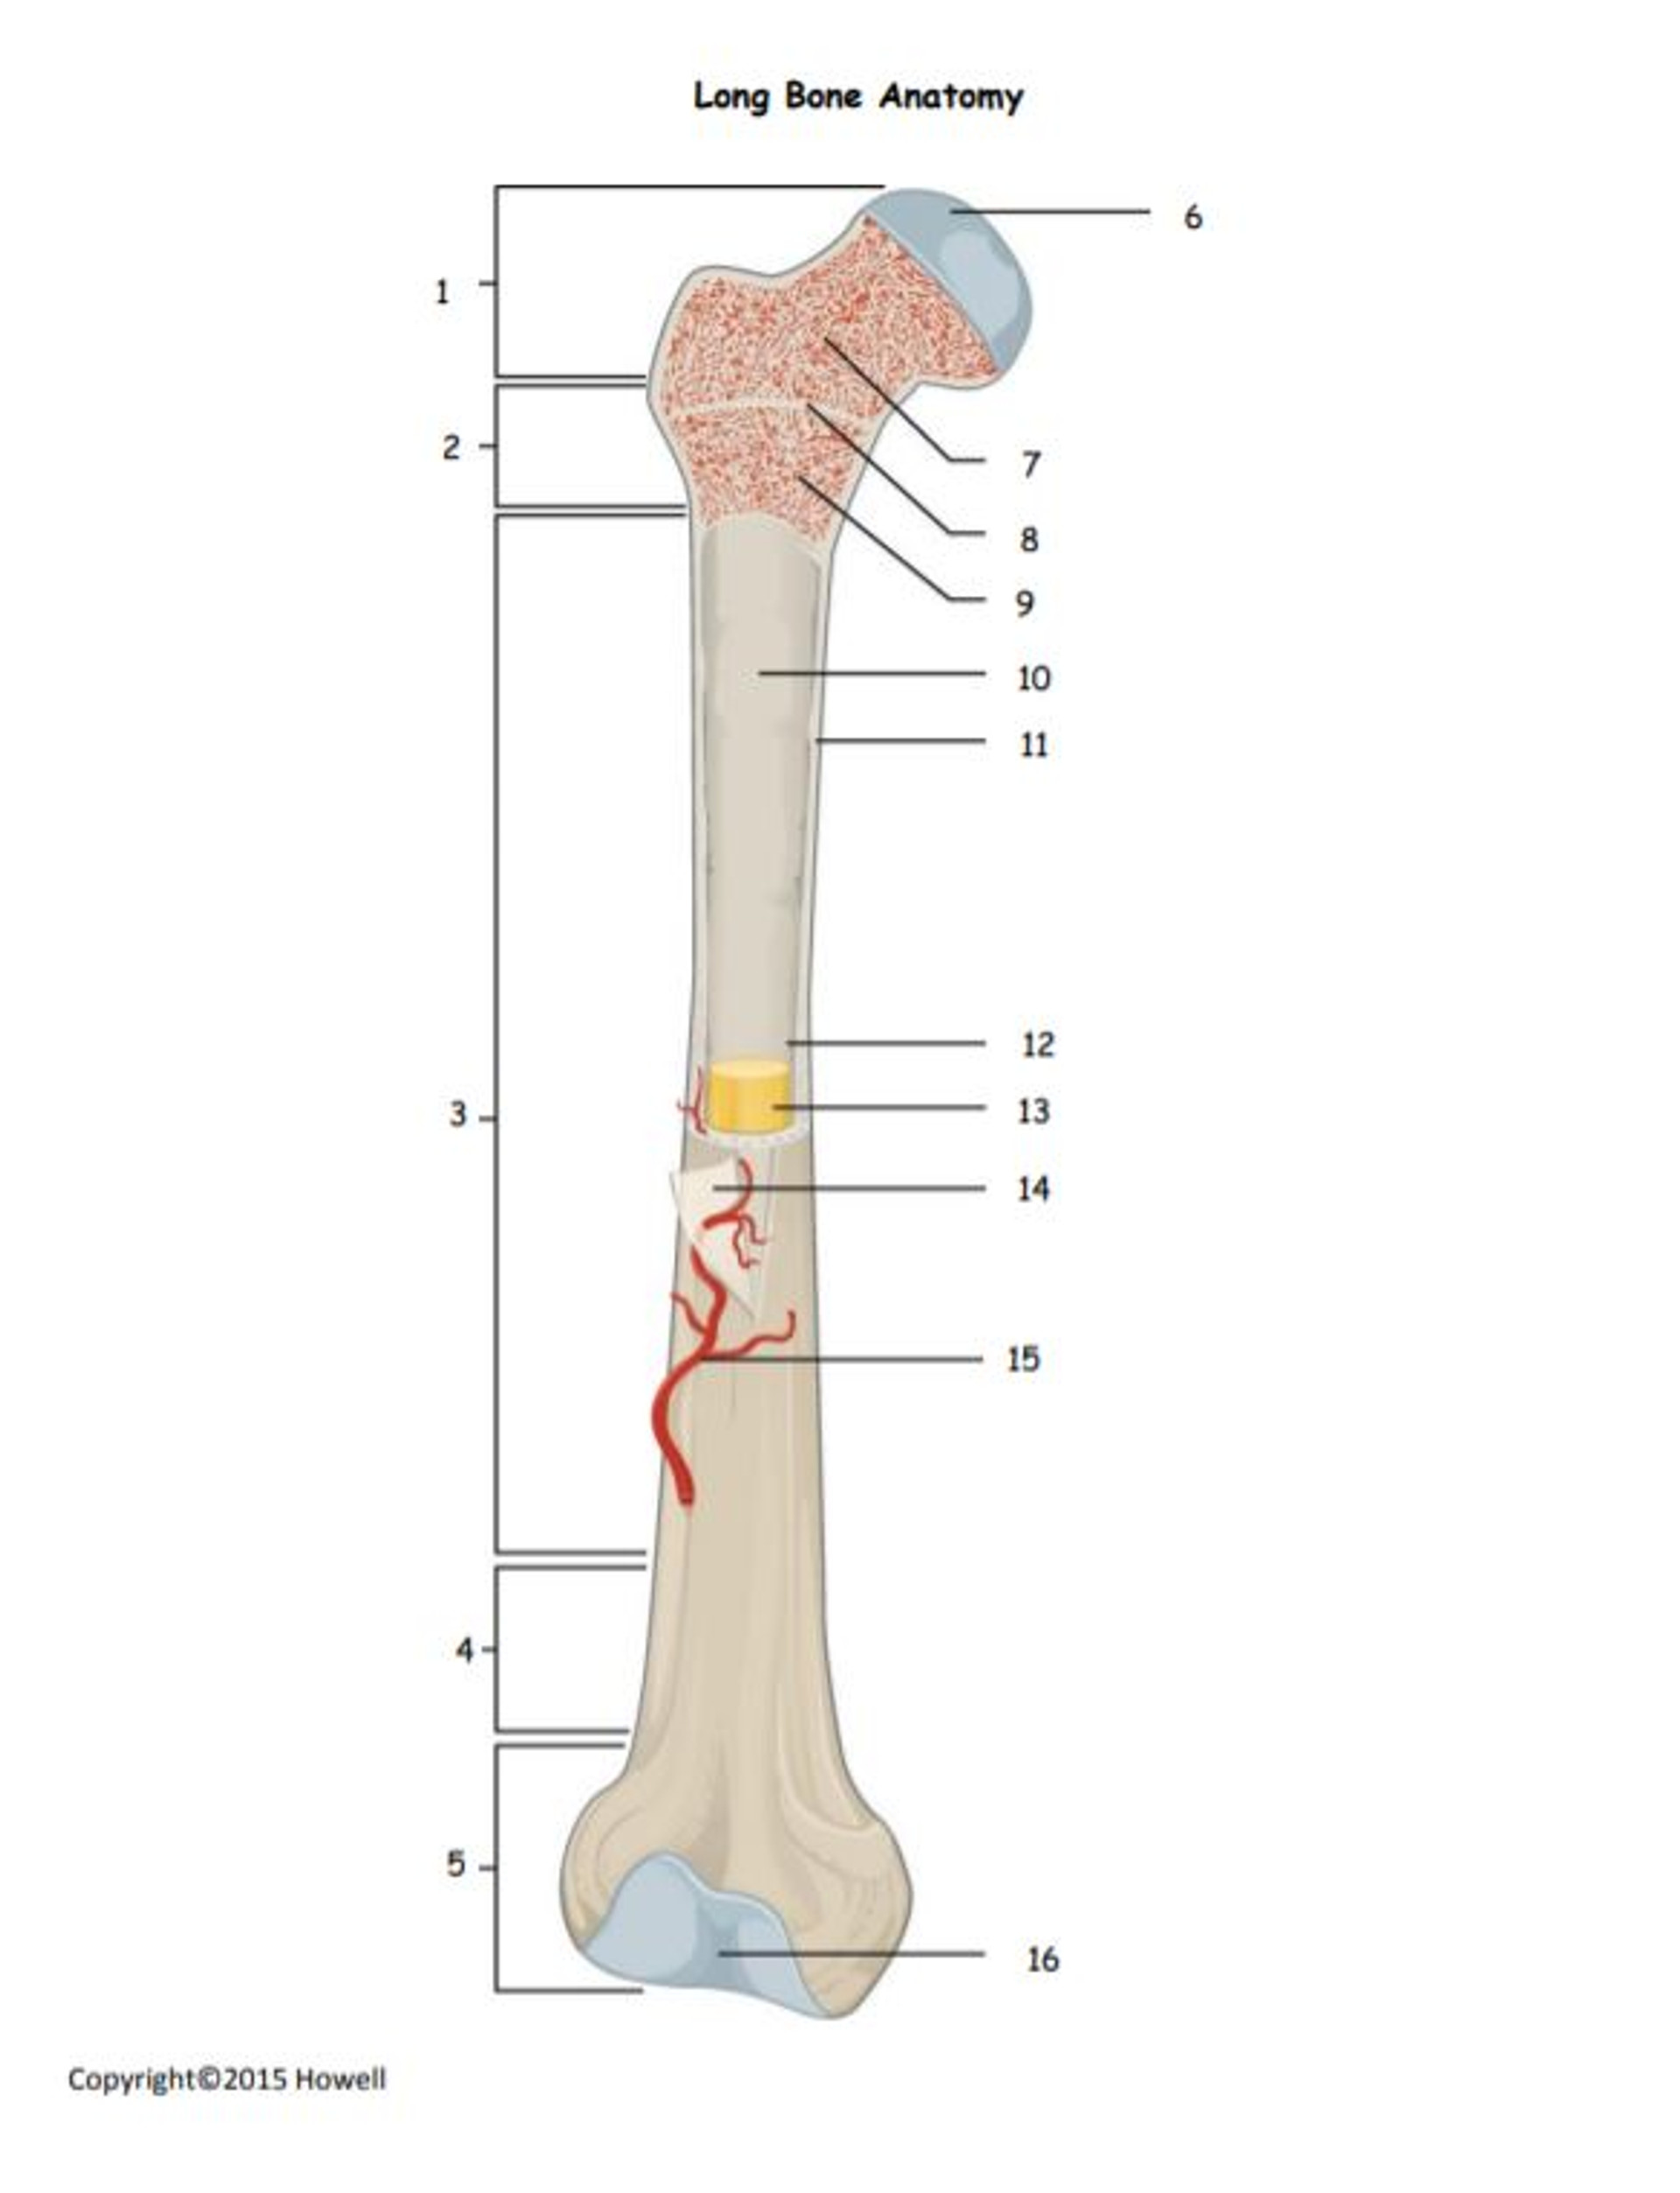 Long Bone Anatomy Quiz or Worksheet - Amped Up Learning